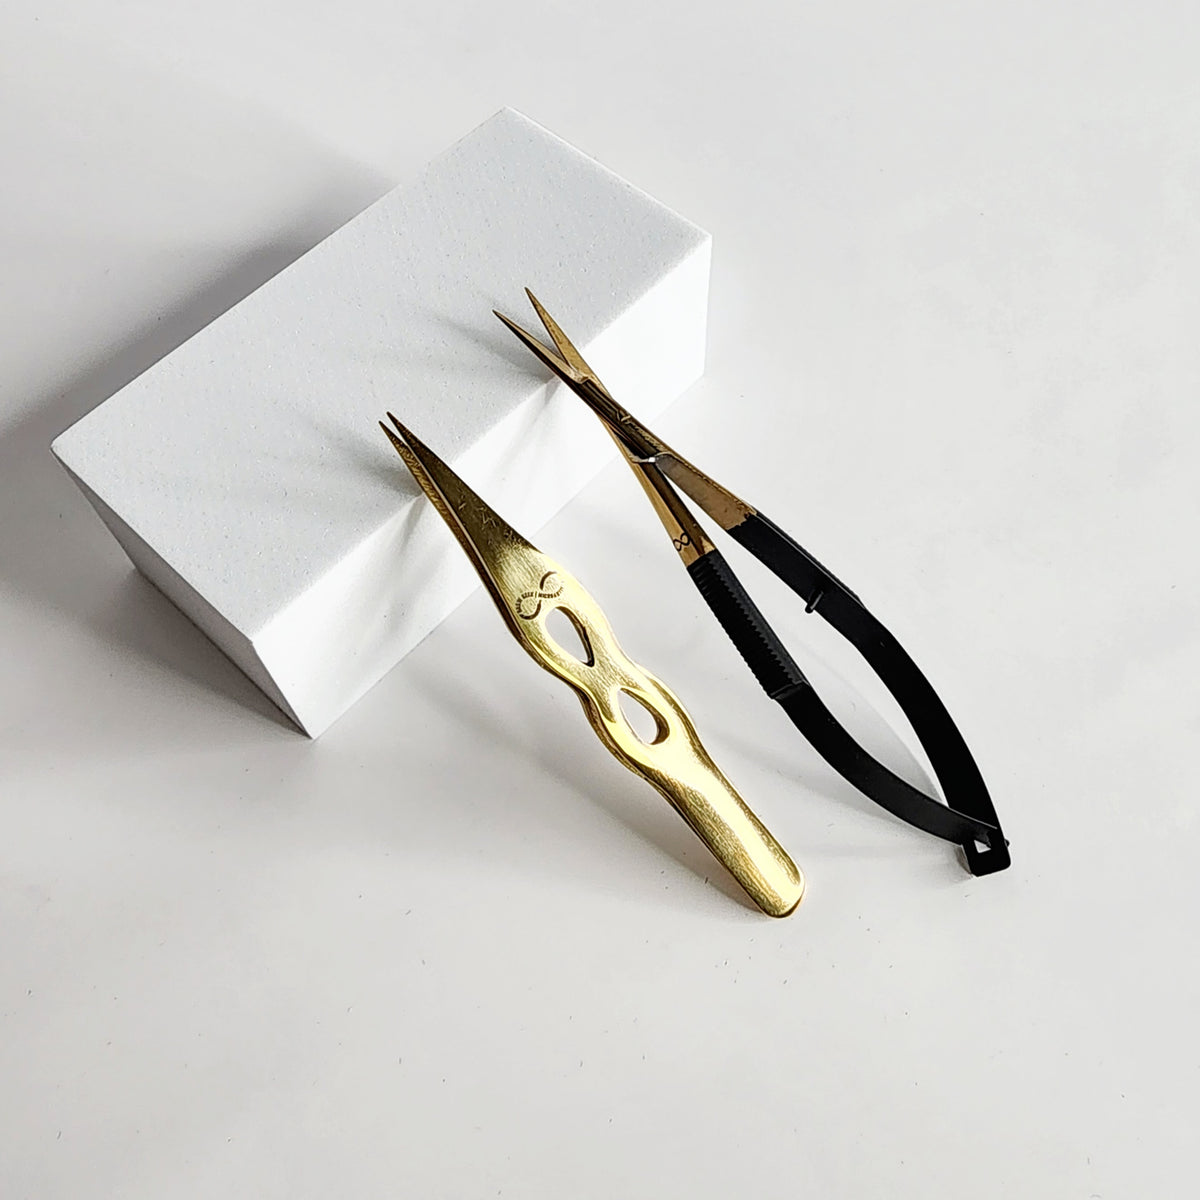 Infinity Hybrid Gold Tweezer and Spring Scissors